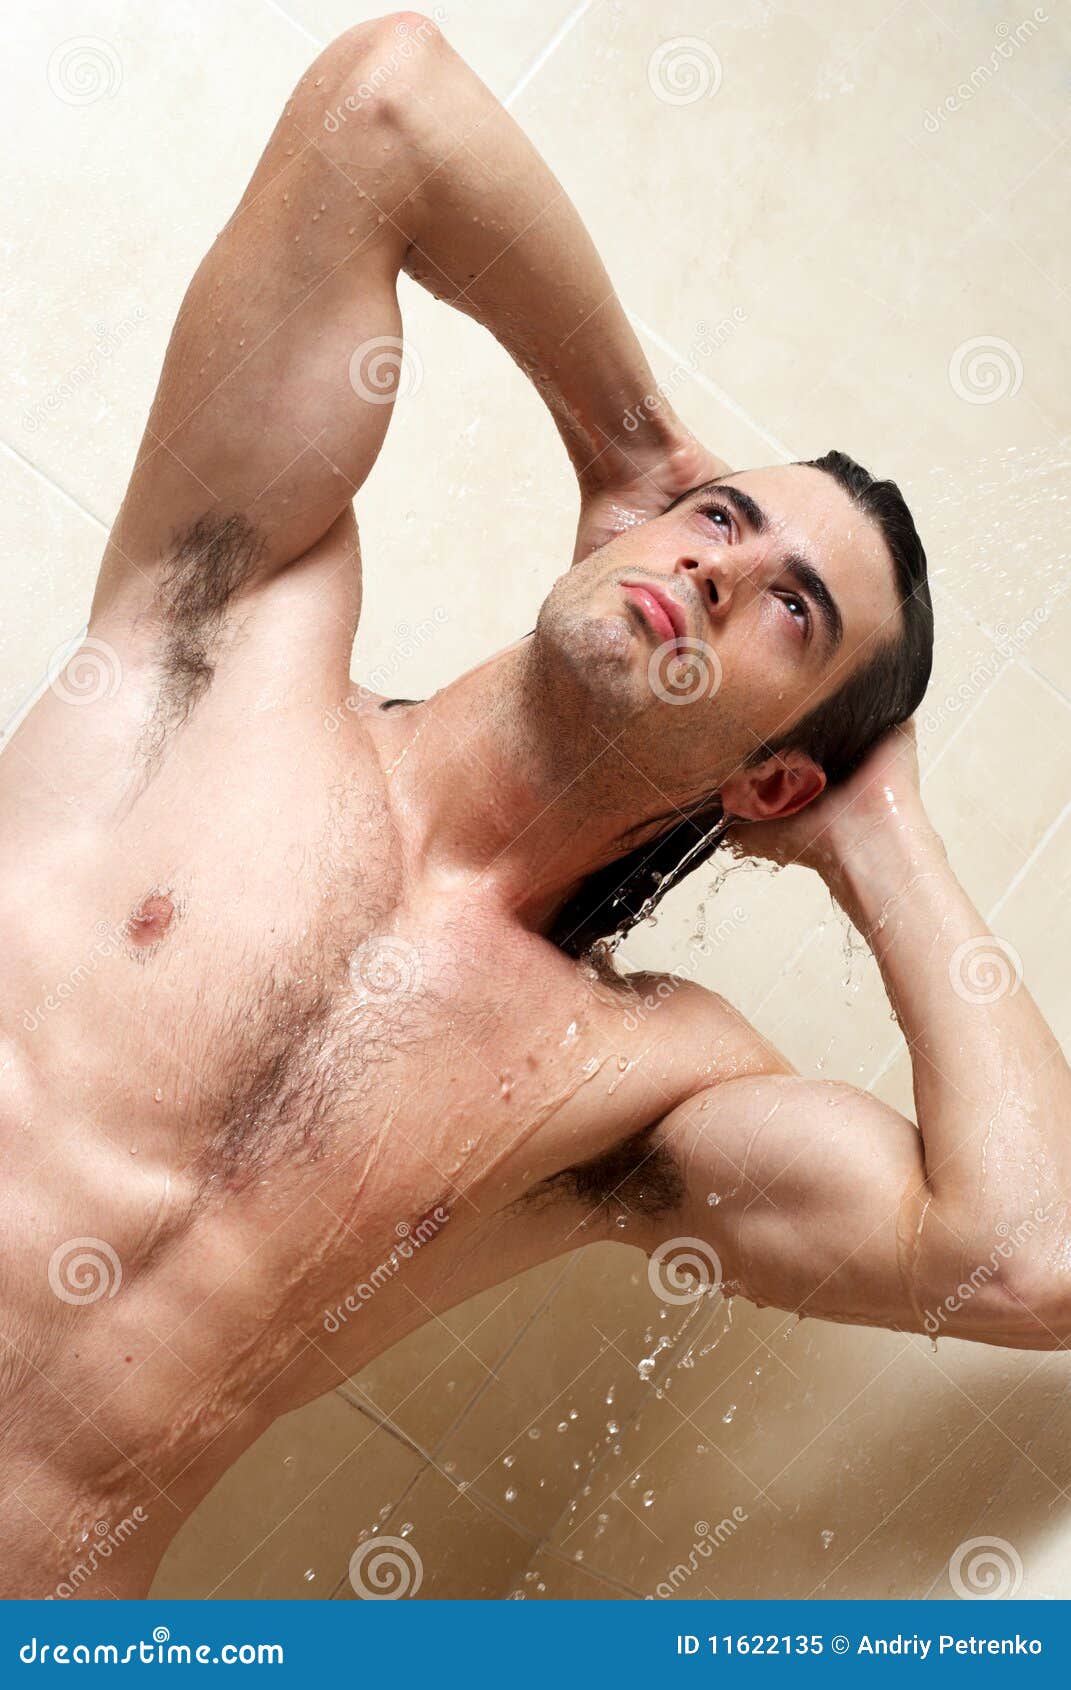 Shower Busty